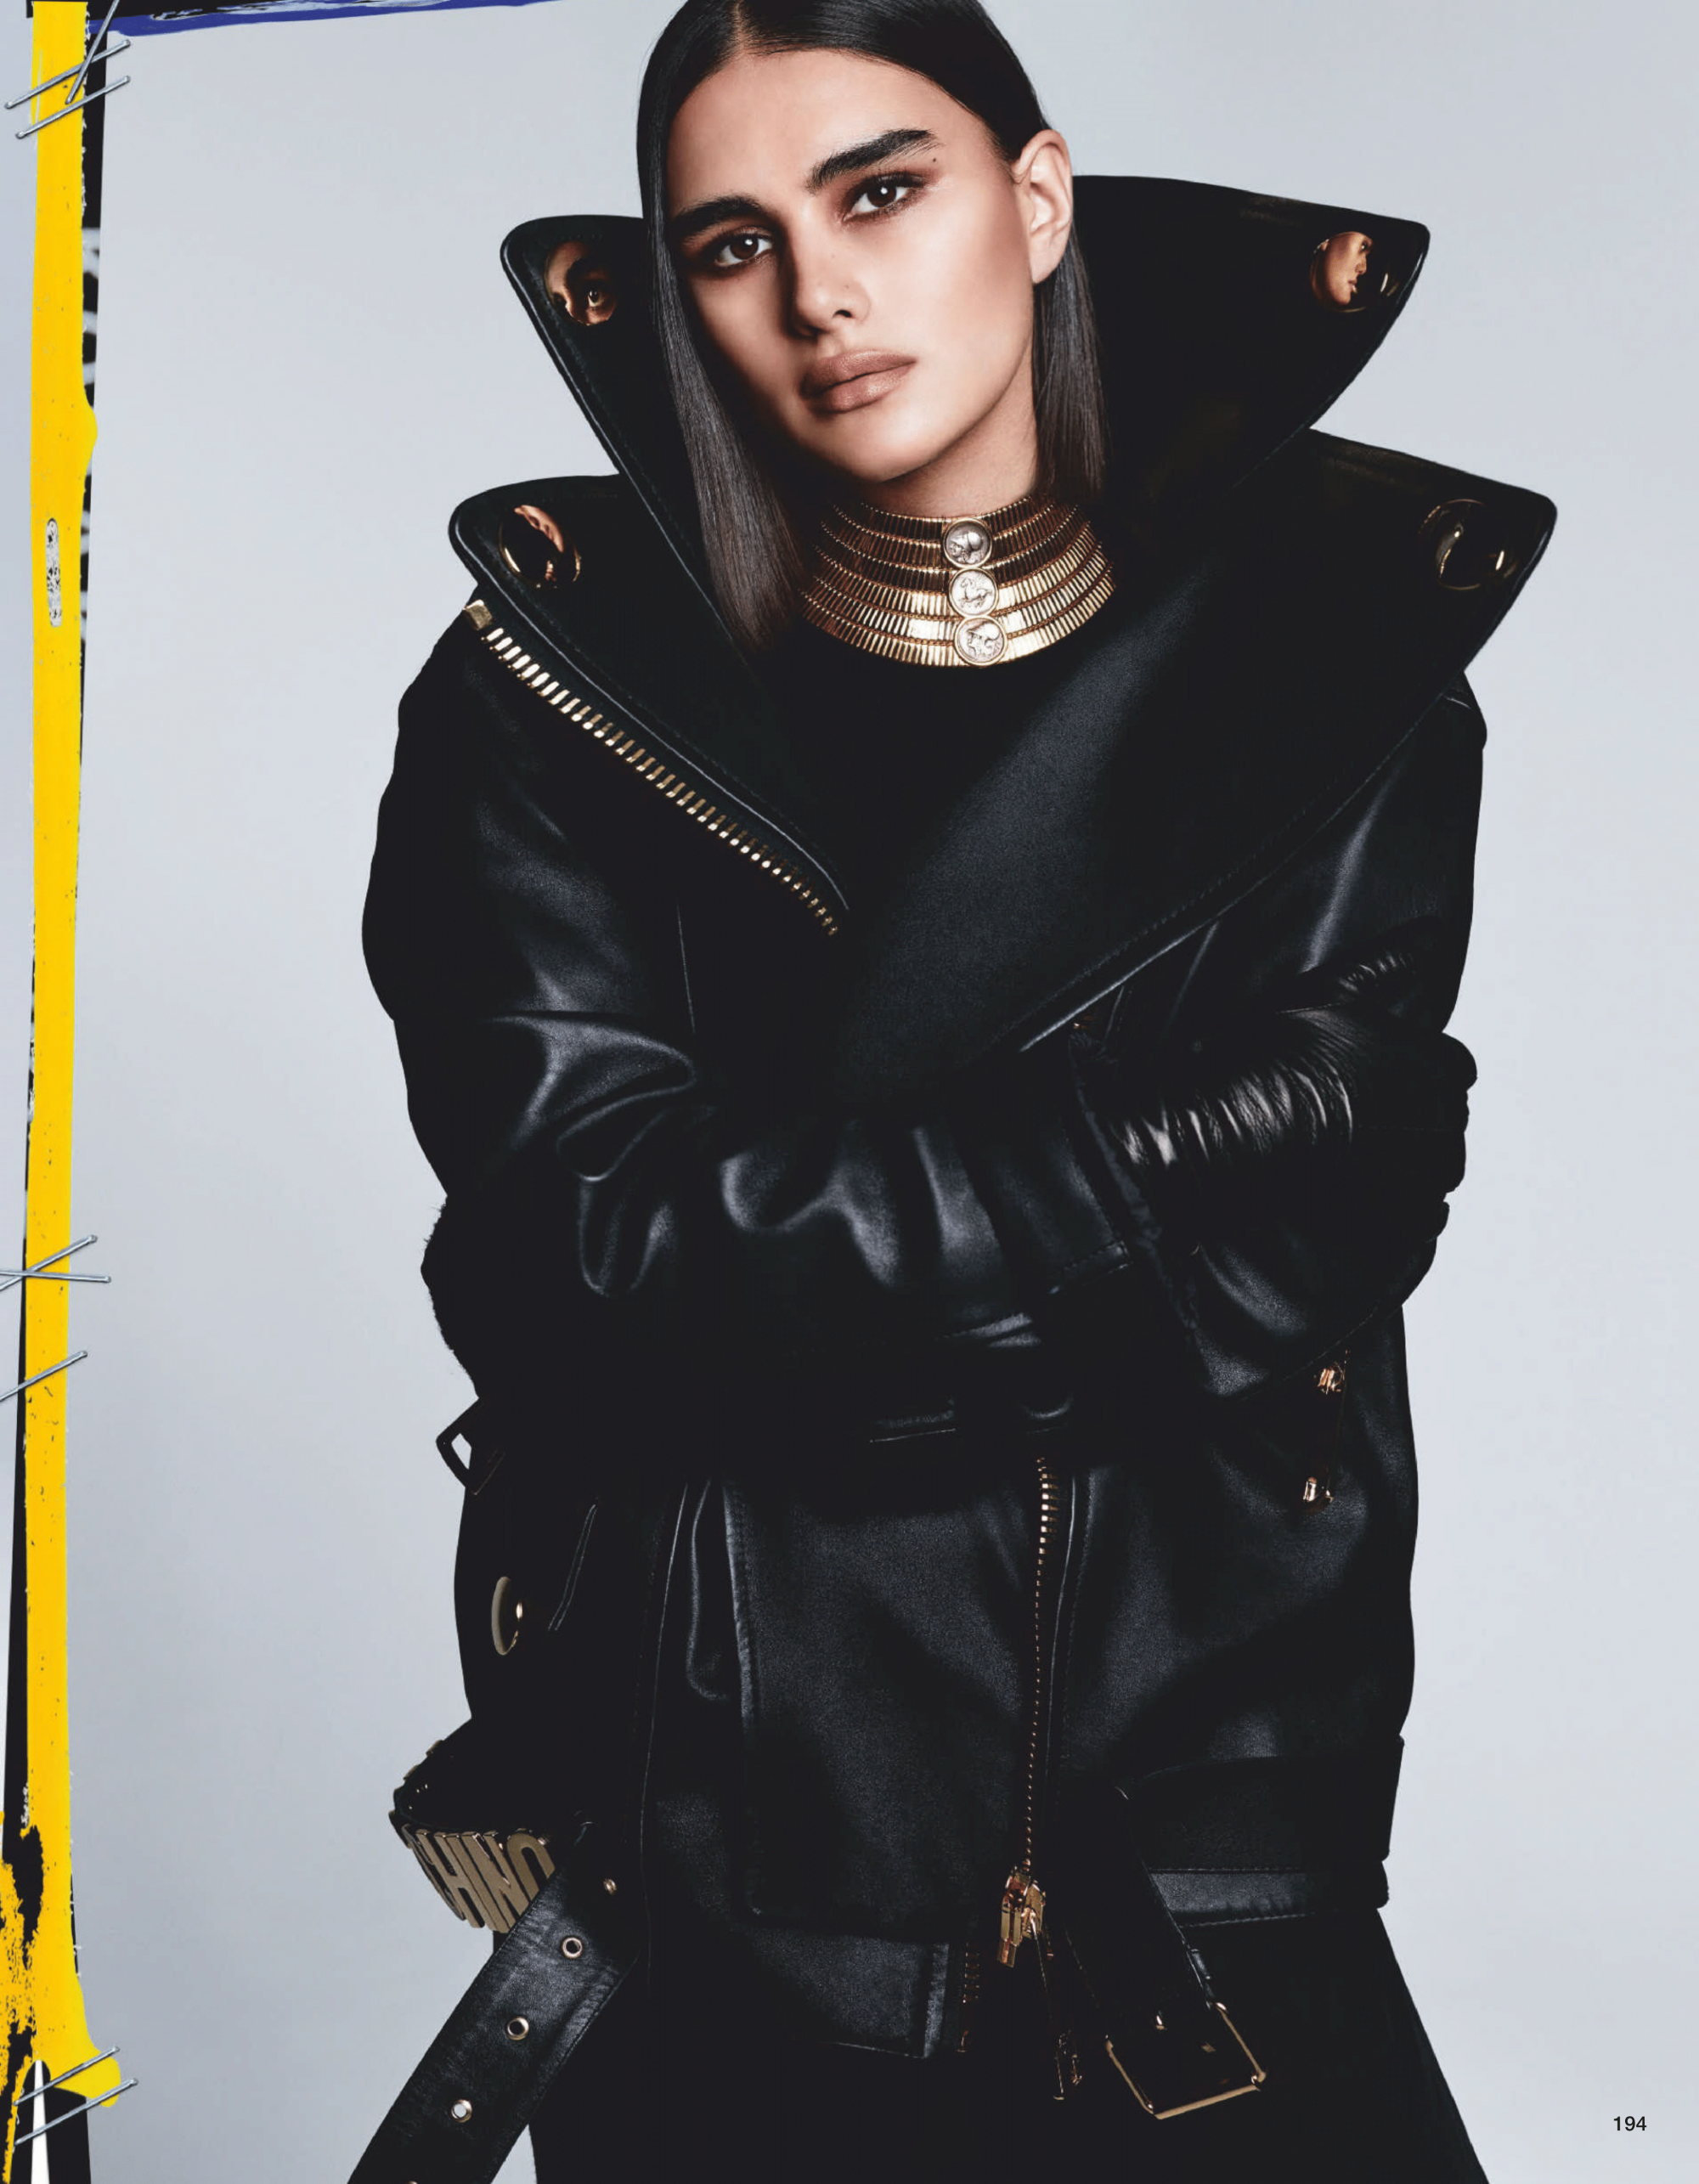 Luigi Iango 'Sketch Book Style' in Vogue Japan Oct 2020 (11).png